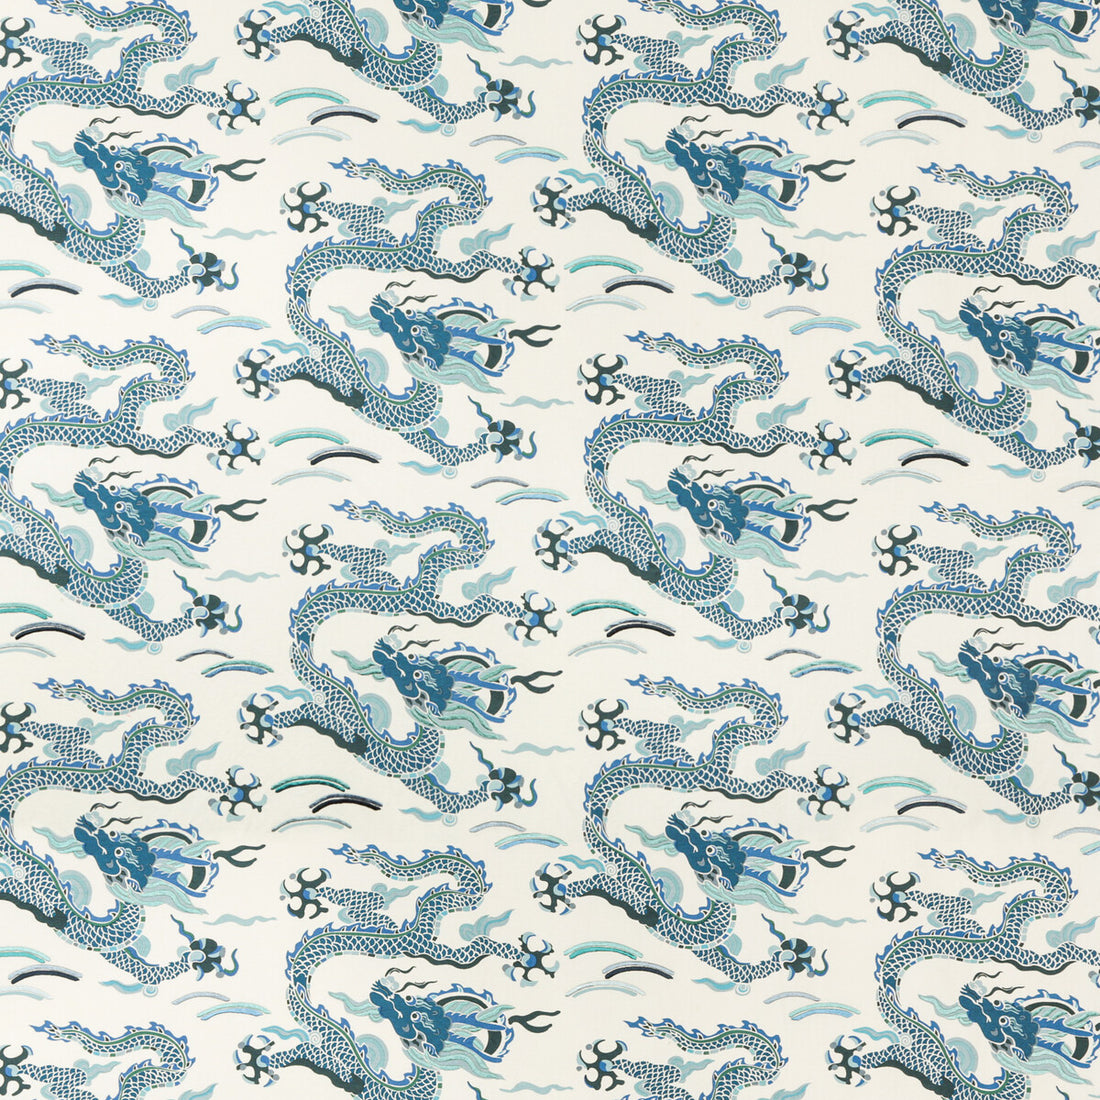 Zen Dragon fabric in indigo color - pattern ZEN DRAGON.5.0 - by Kravet Couture